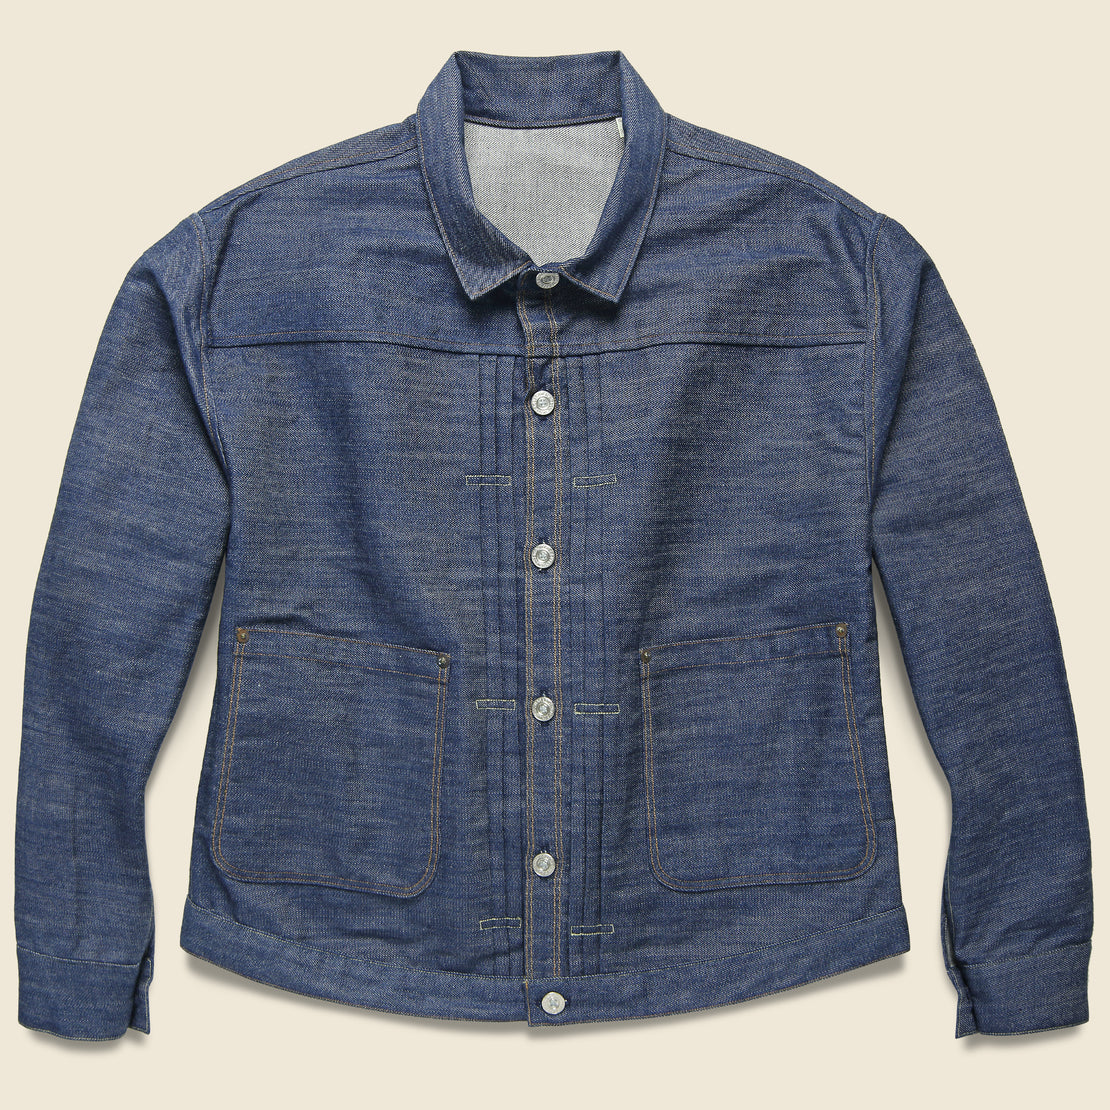 Levis Vintage Clothing 1880 Triple Pleat Blouse Jacket - Indigo